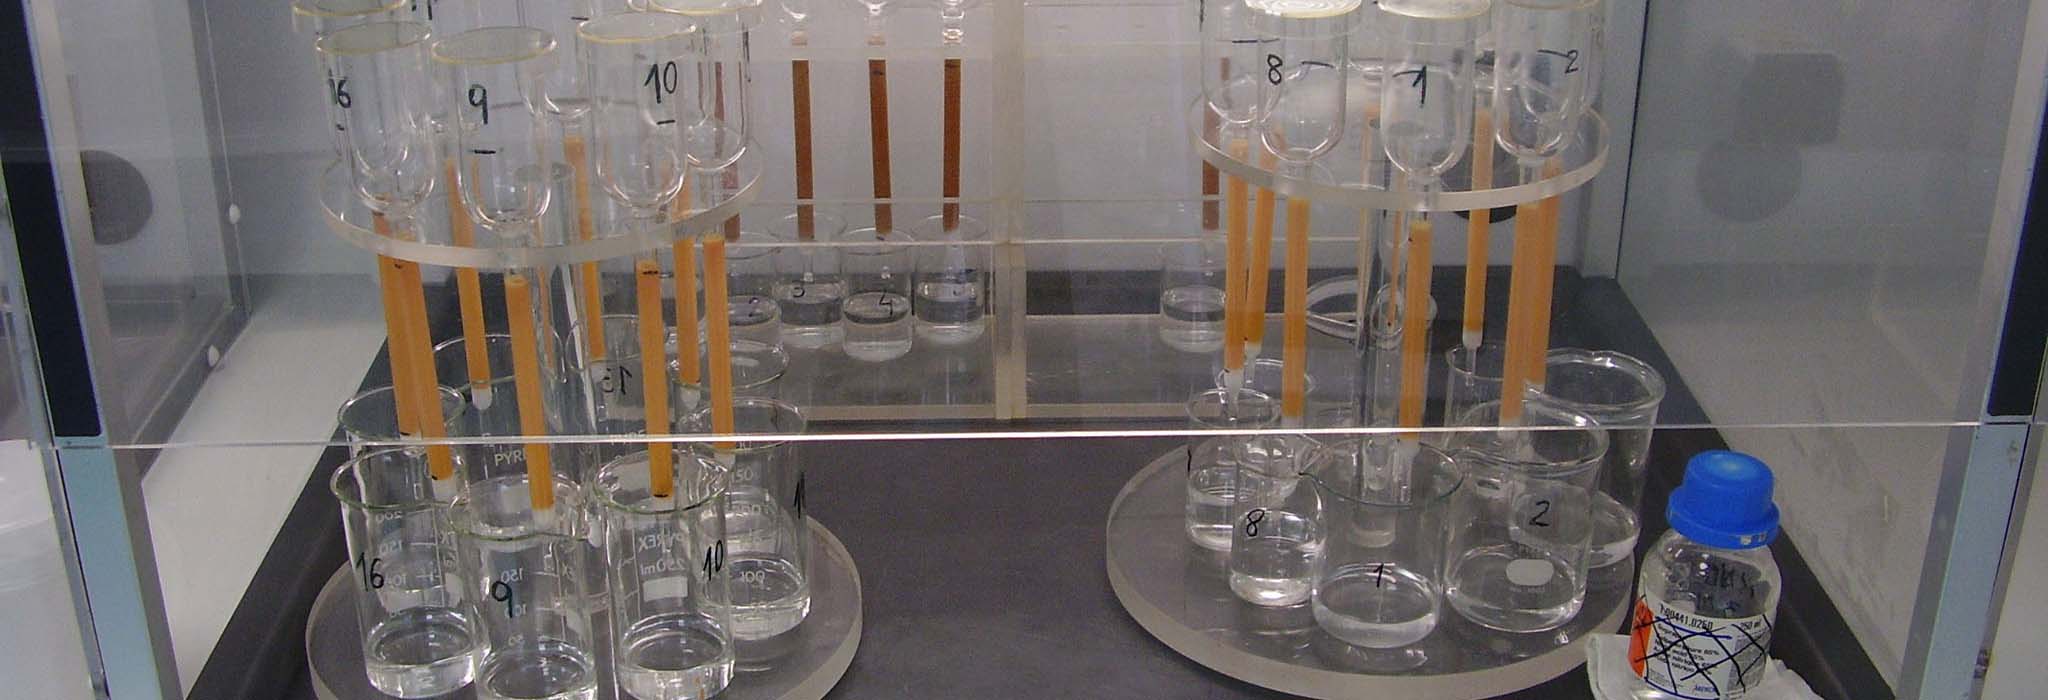 Chromatography columns